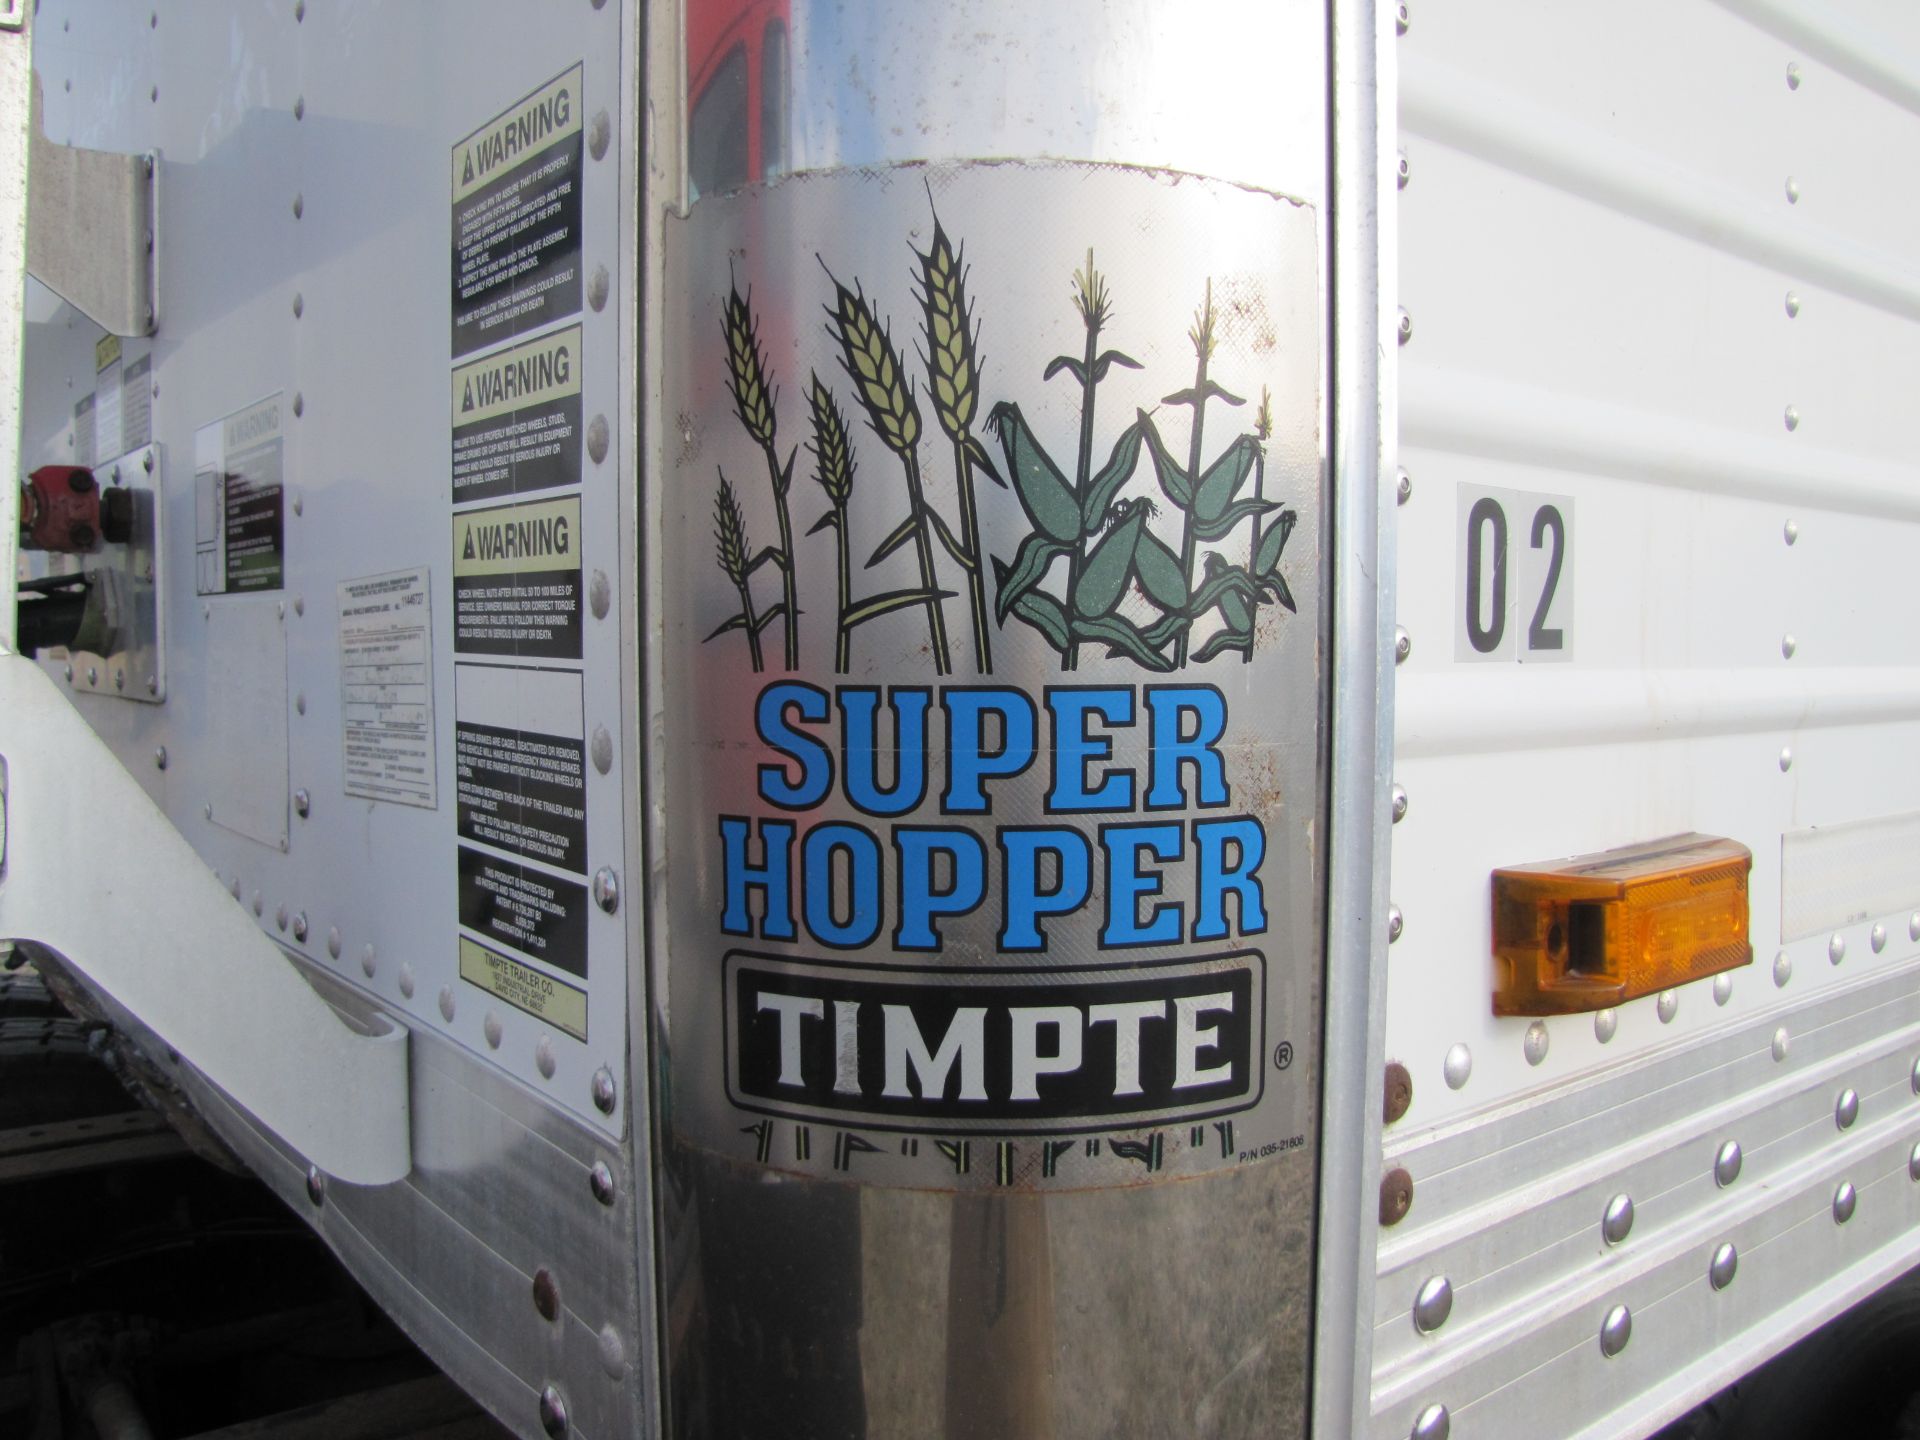 34’ 2006 Timpte hopper bottom, 11R24.5L tires, roll tarp, VIN 1TDH335206B108993 - Image 8 of 34